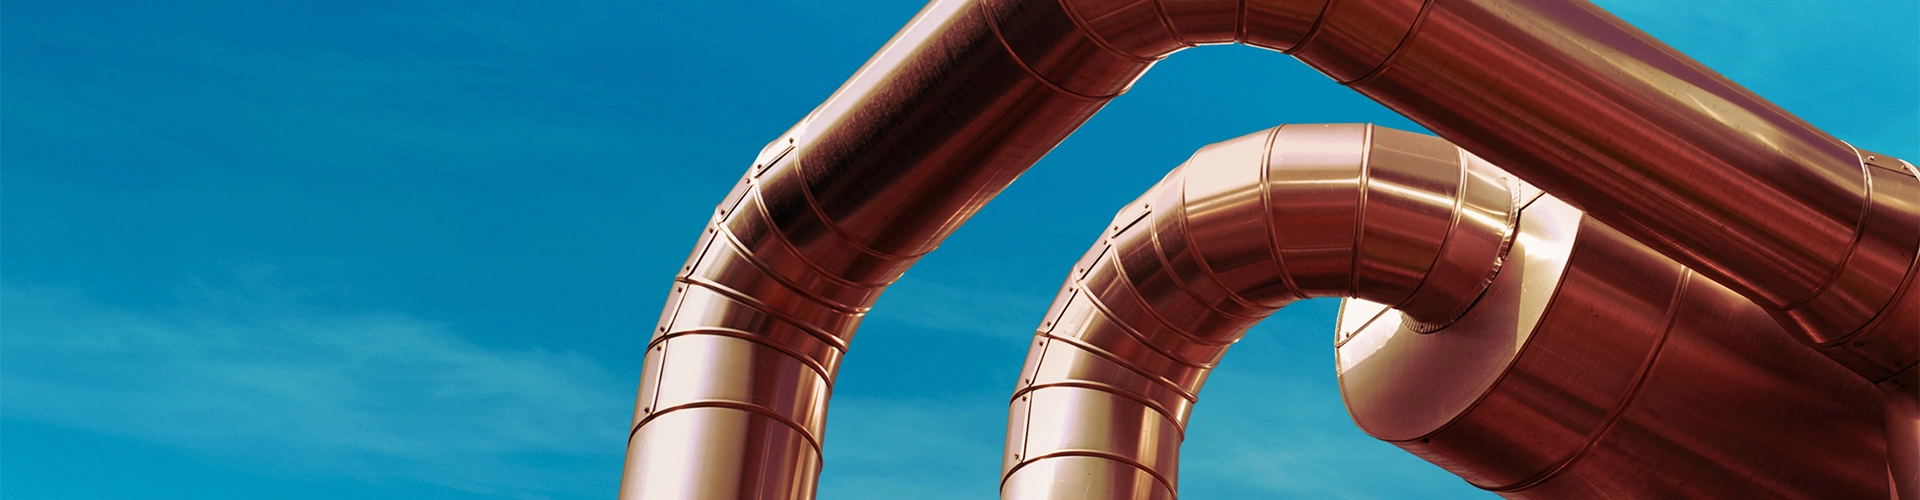 Blog Hero Pipelines - Copperleaf Decision Analytics